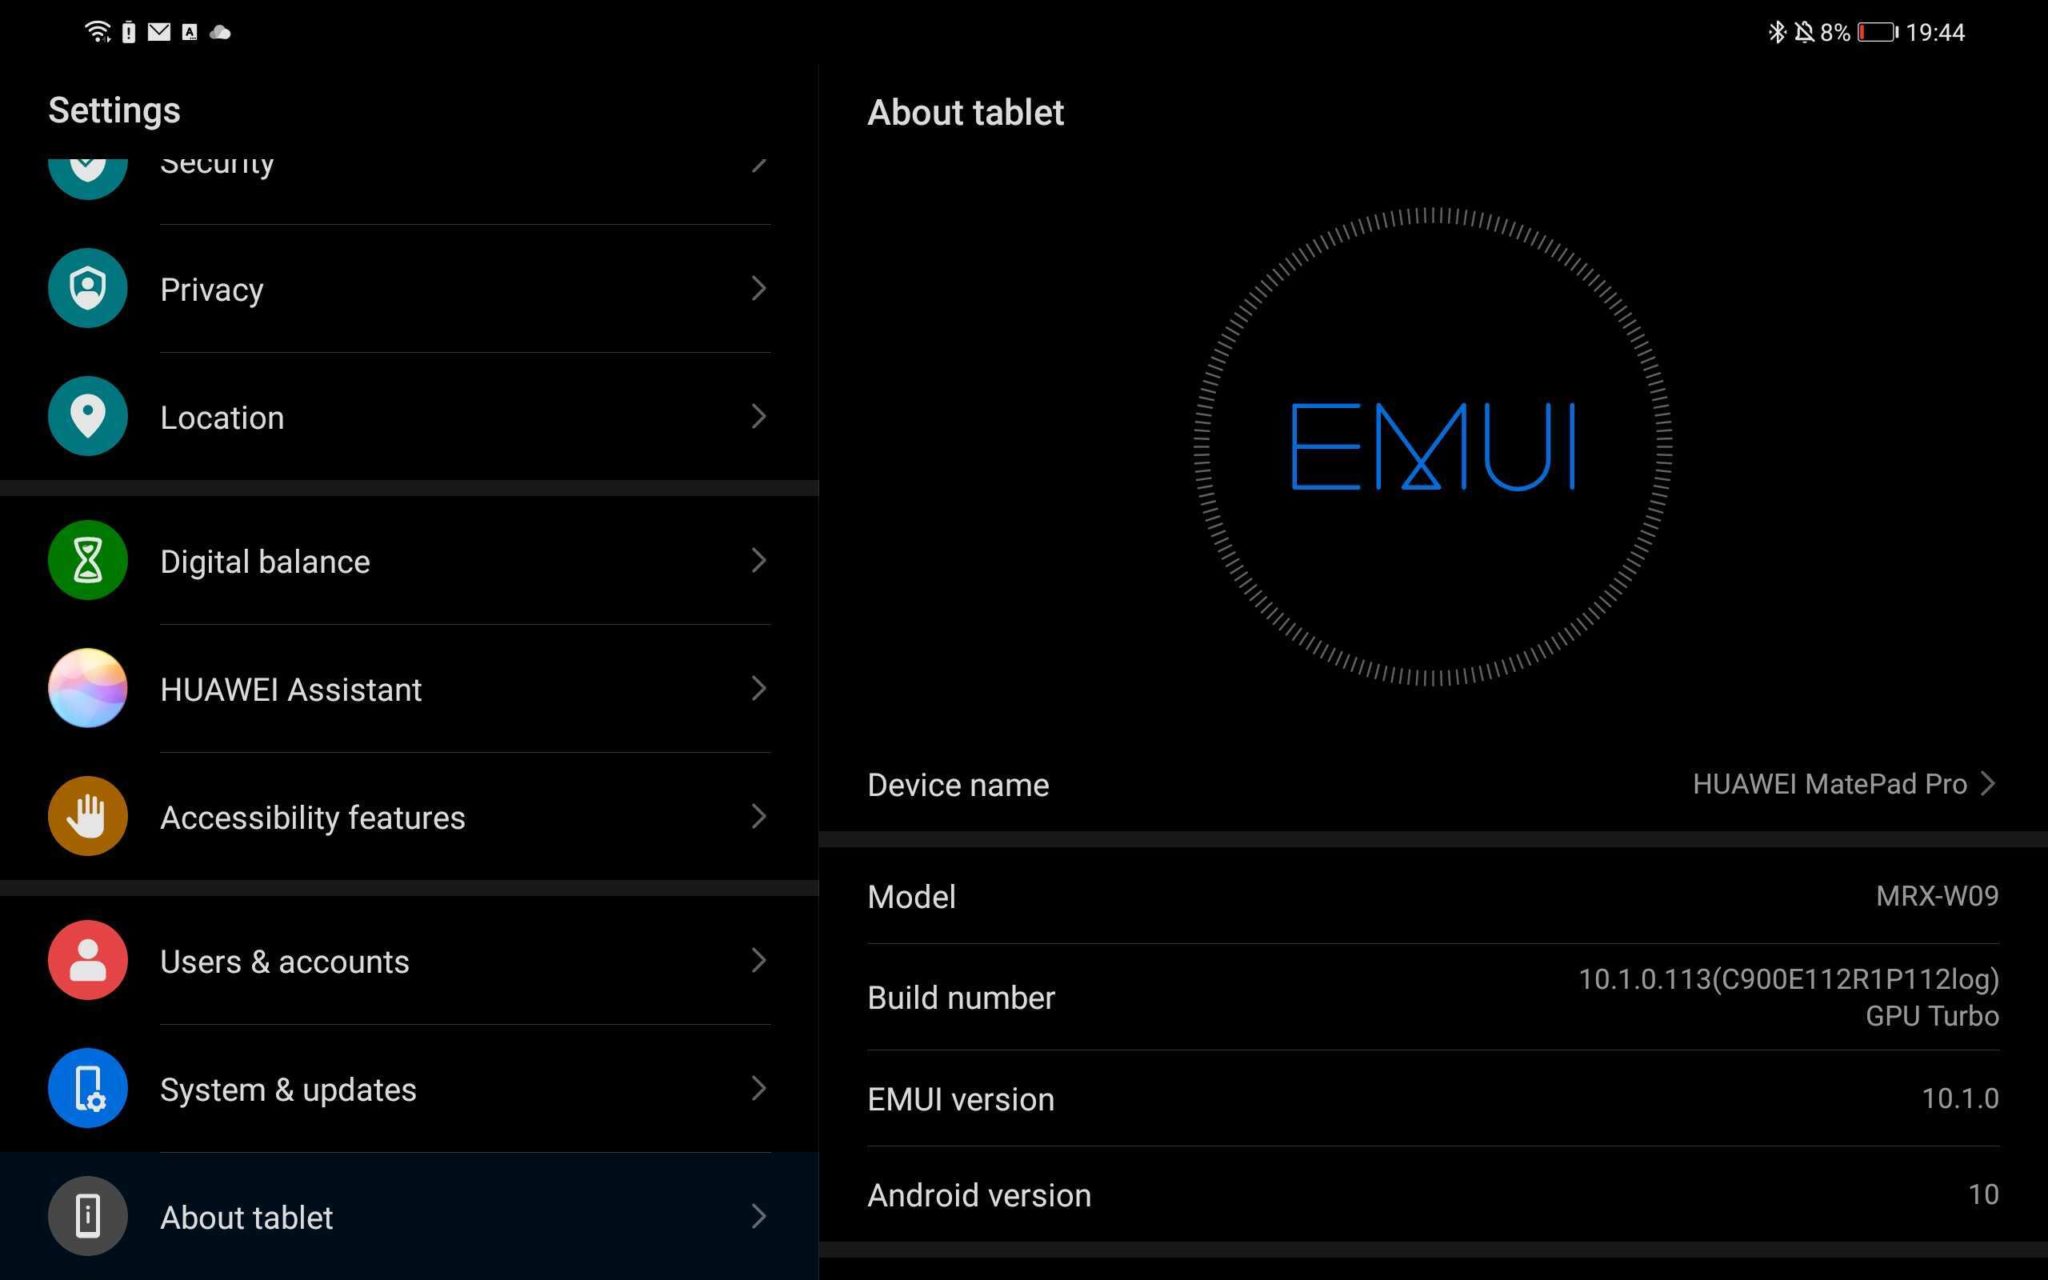 emui-vs-harmony-os-screenshot-settings-example-1-2048x1280.jpg